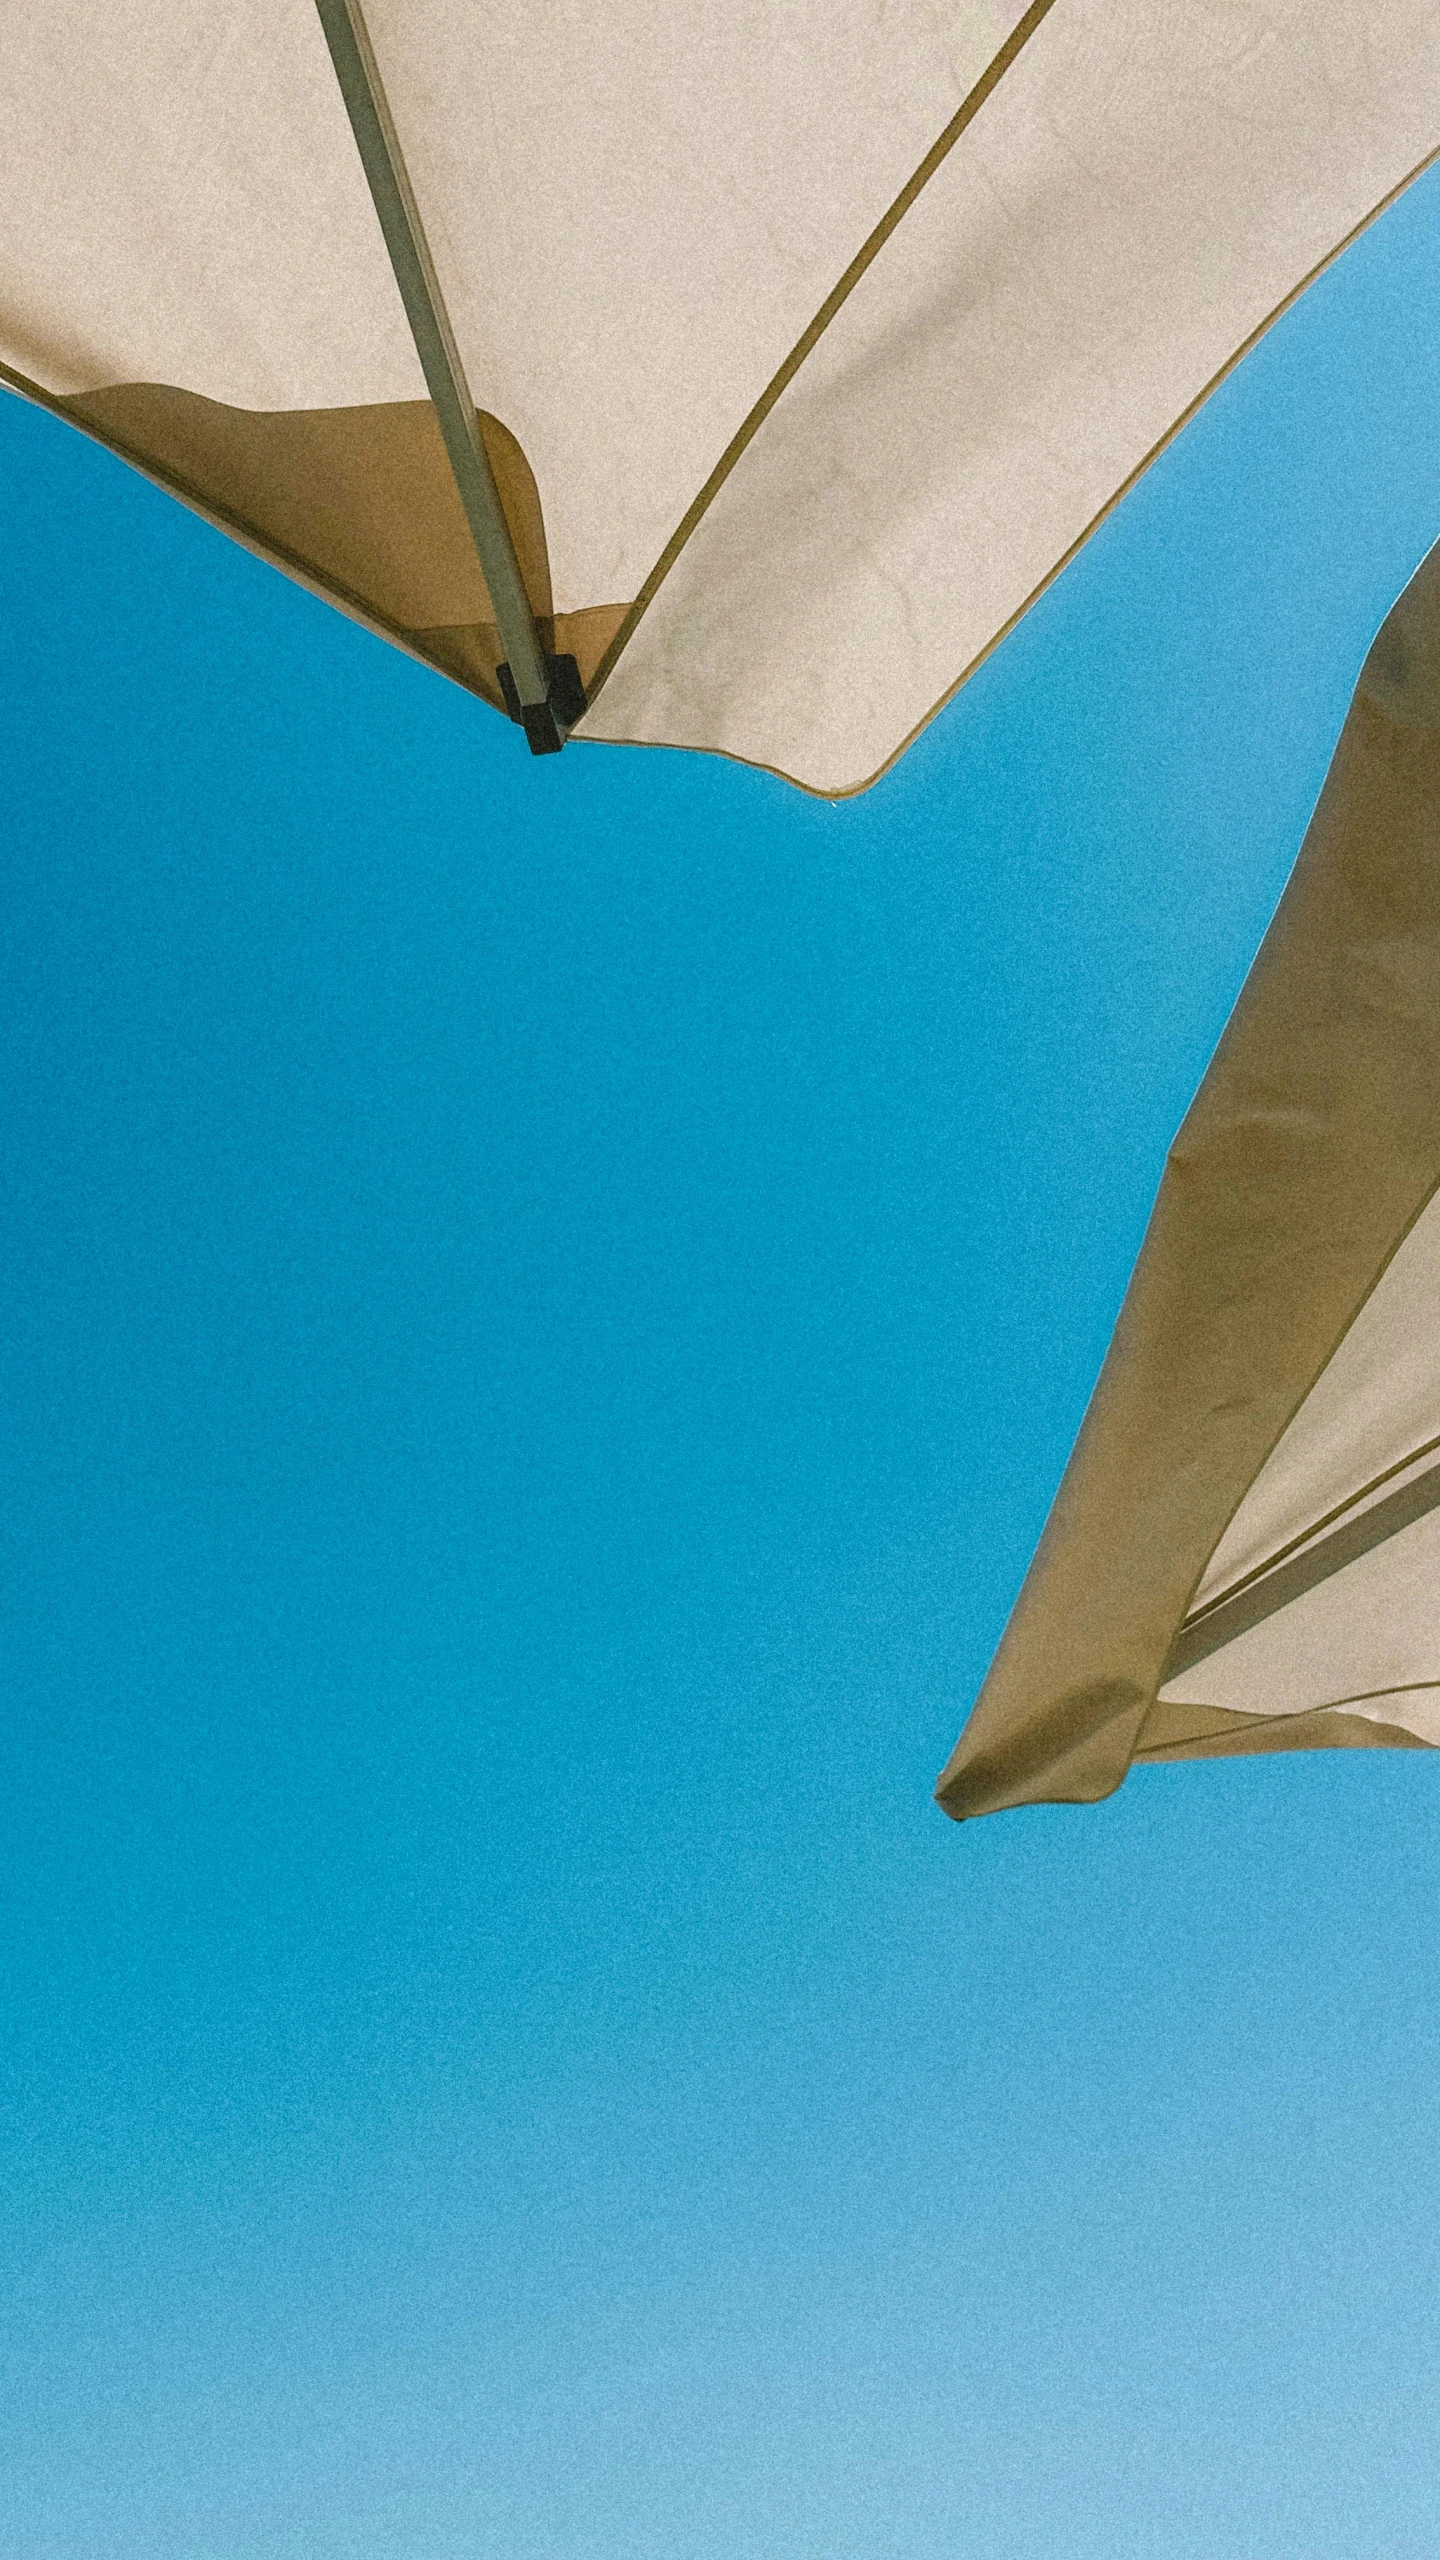 white umbrellas with a blue sky background